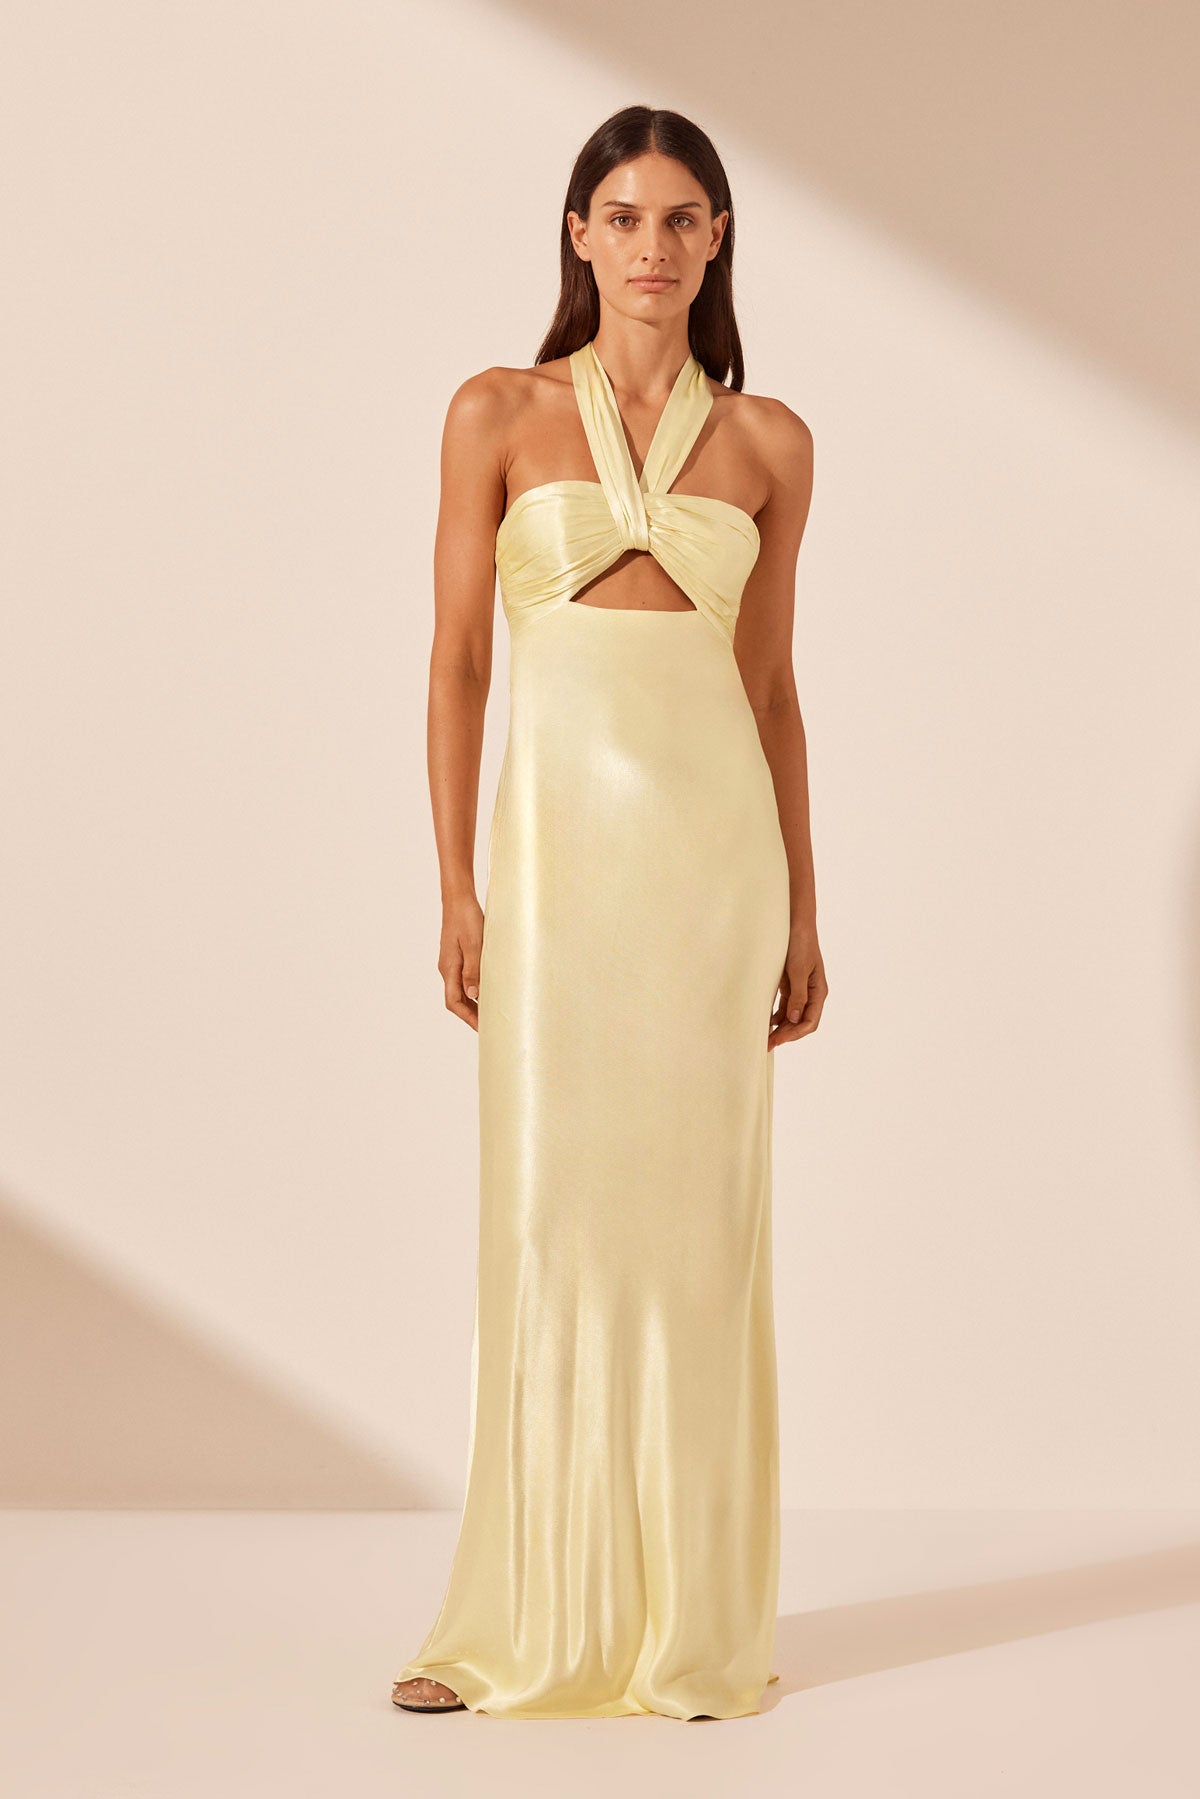 Shona Joy Pink Dress, Designer Collection